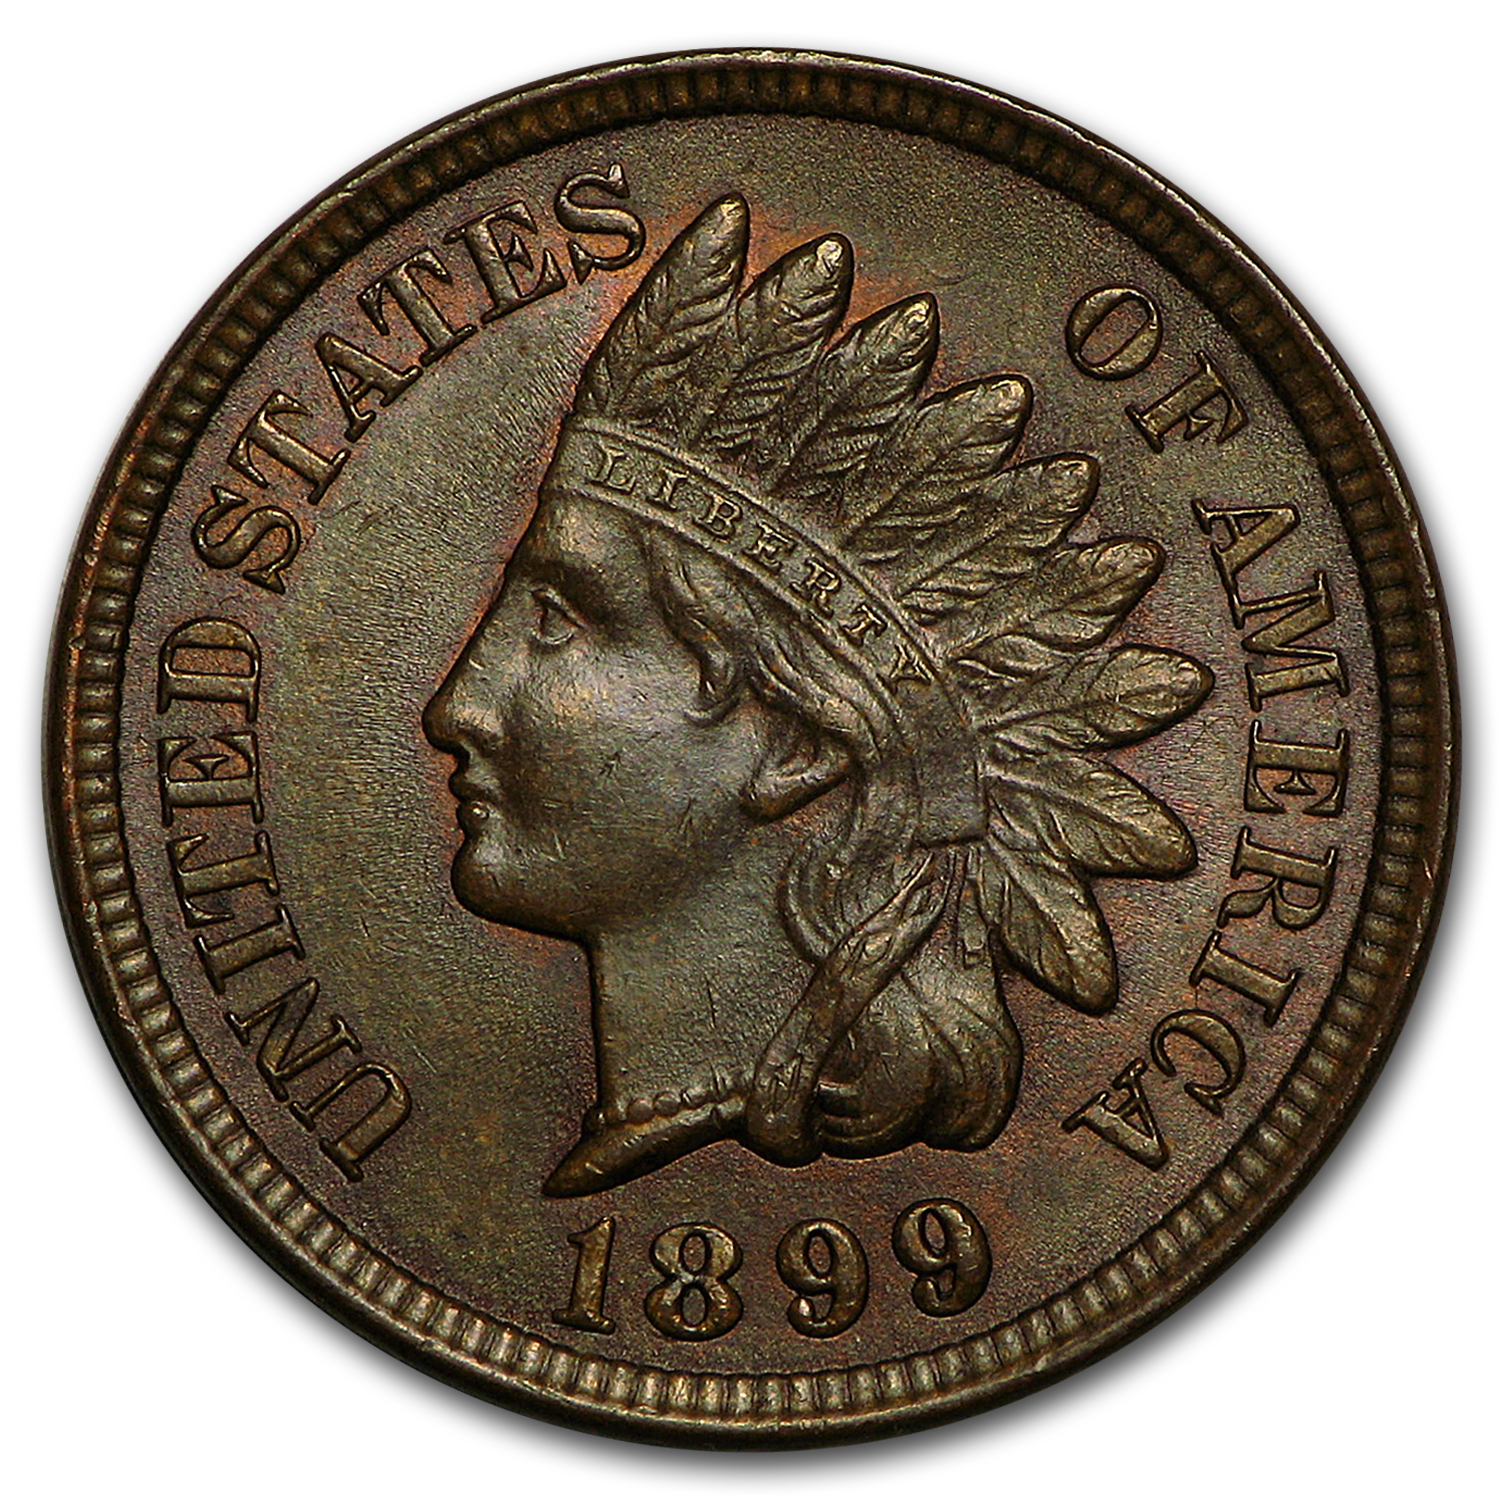 Buy 1899 Indian Head Cent BU